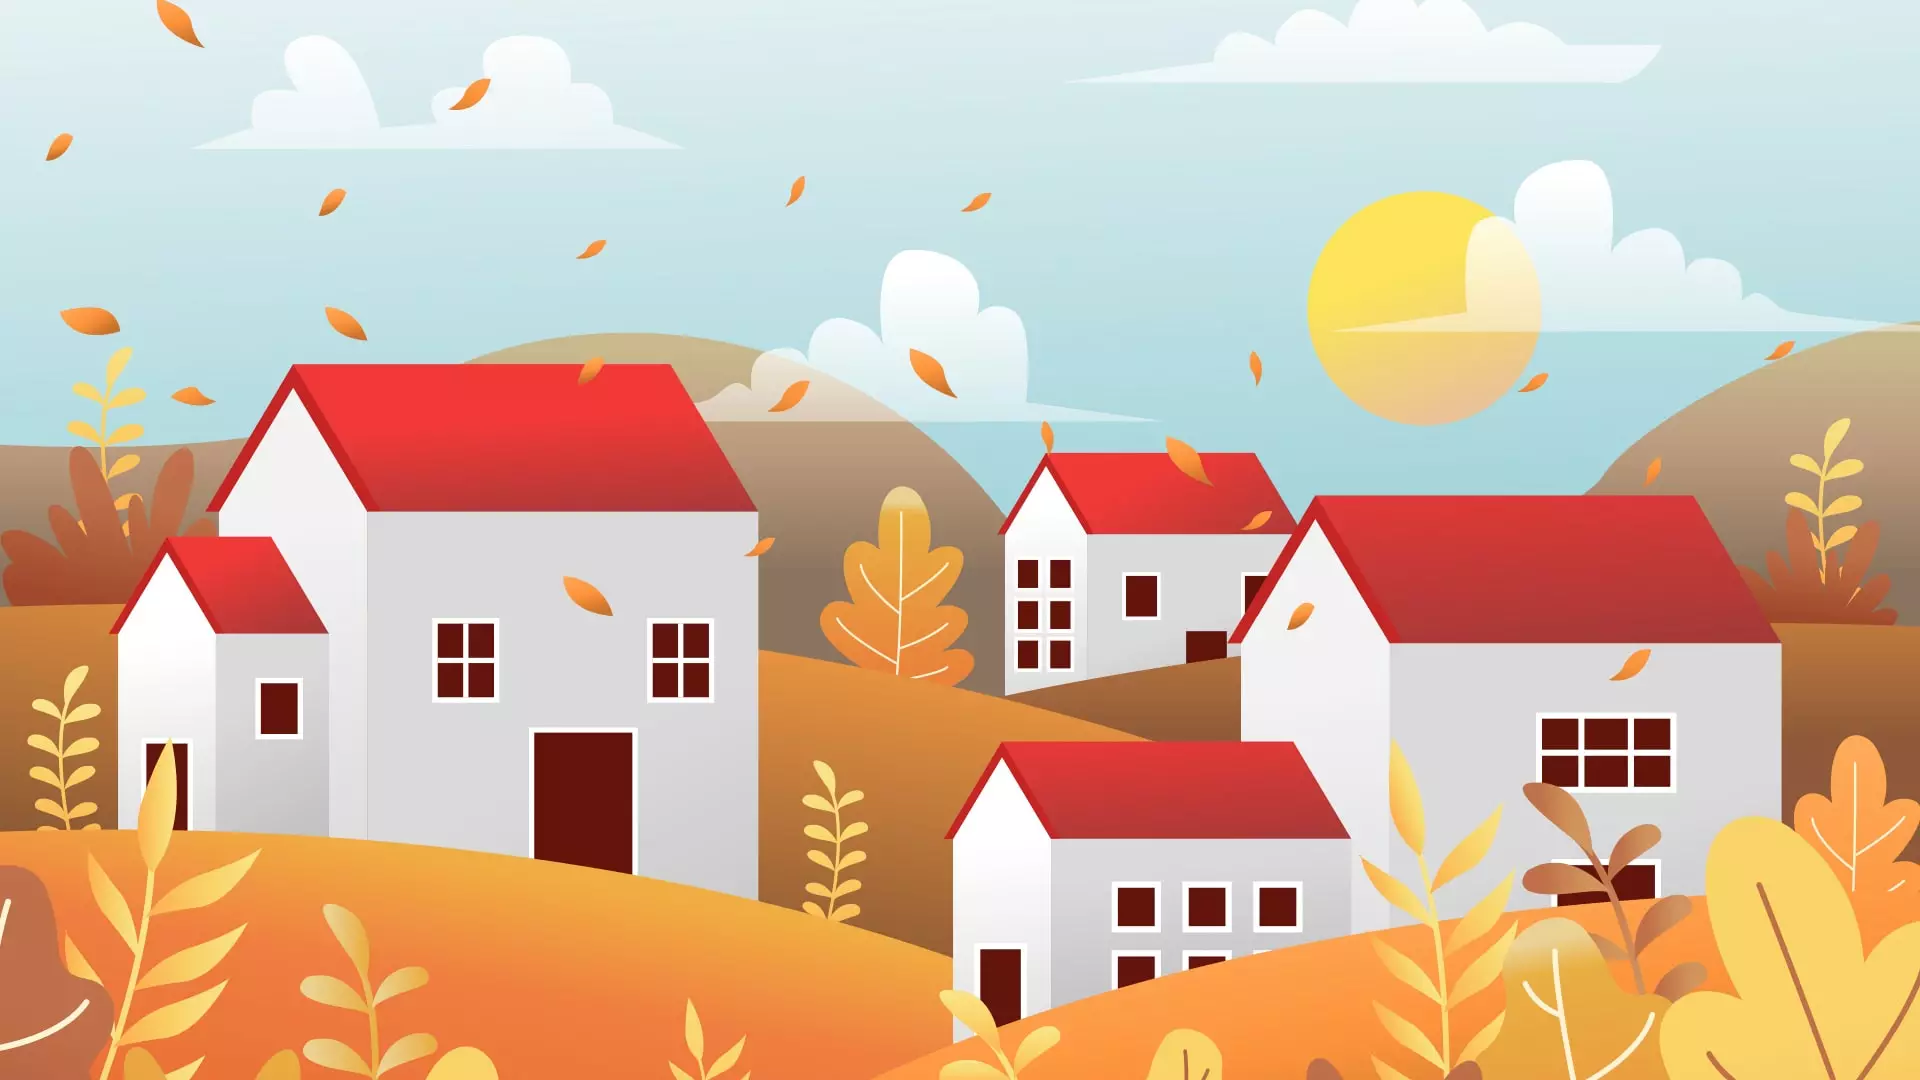 Neighbourhood of houses in autumn